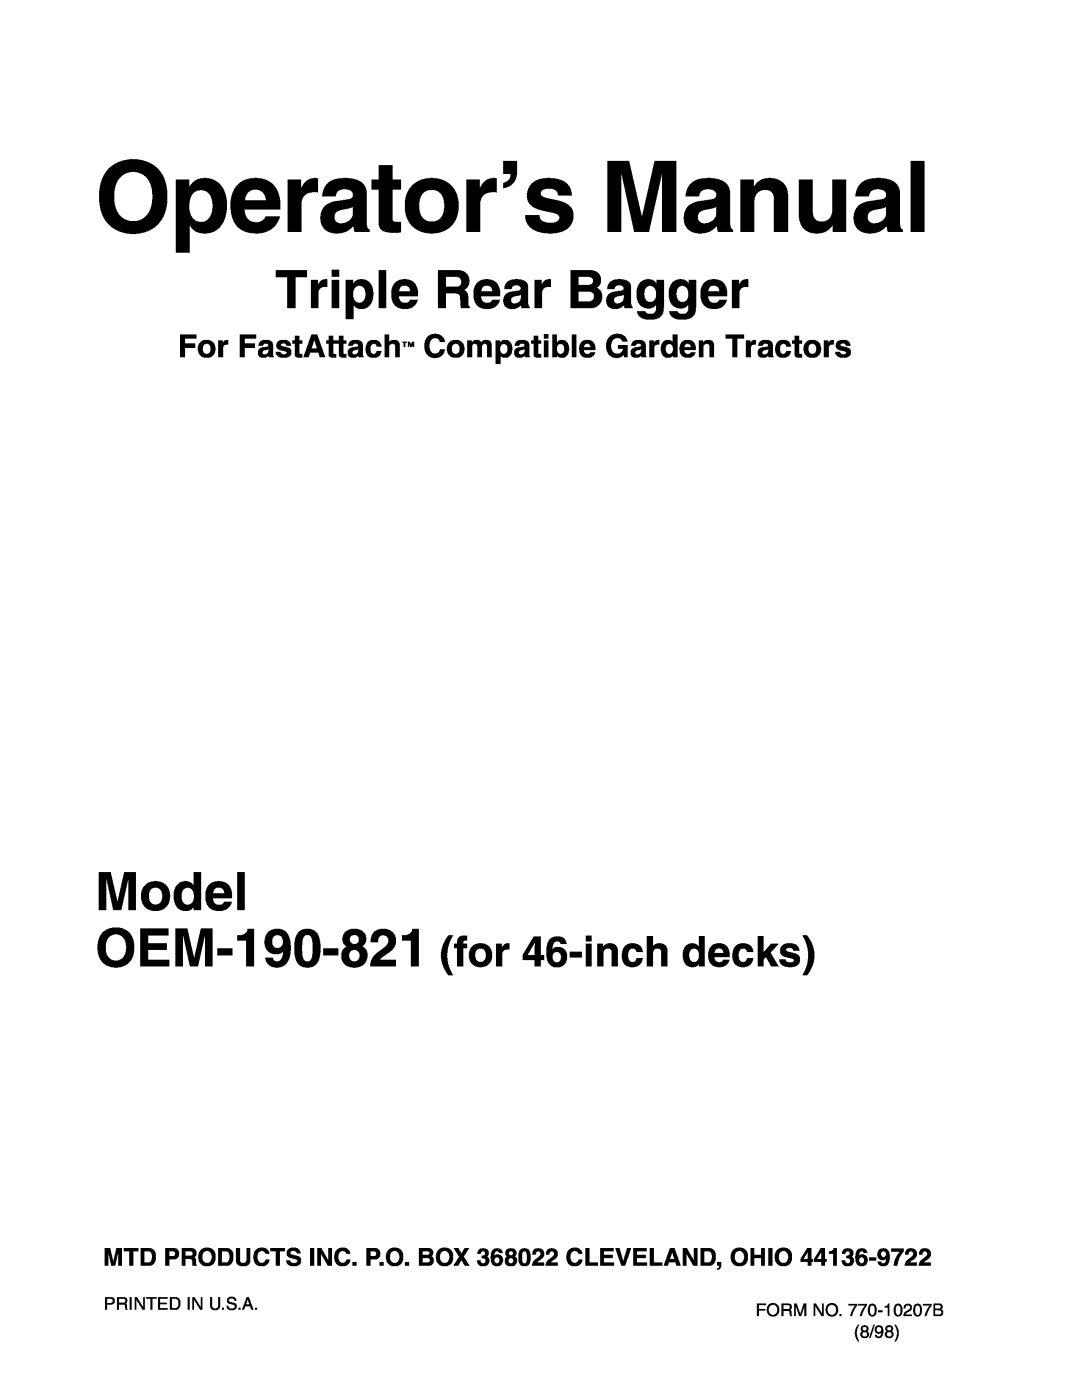 Bolens manual Triple Rear Bagger, Model, OEM-190-821 for 46-inch decks, For FastAttach Compatible Garden Tractors 